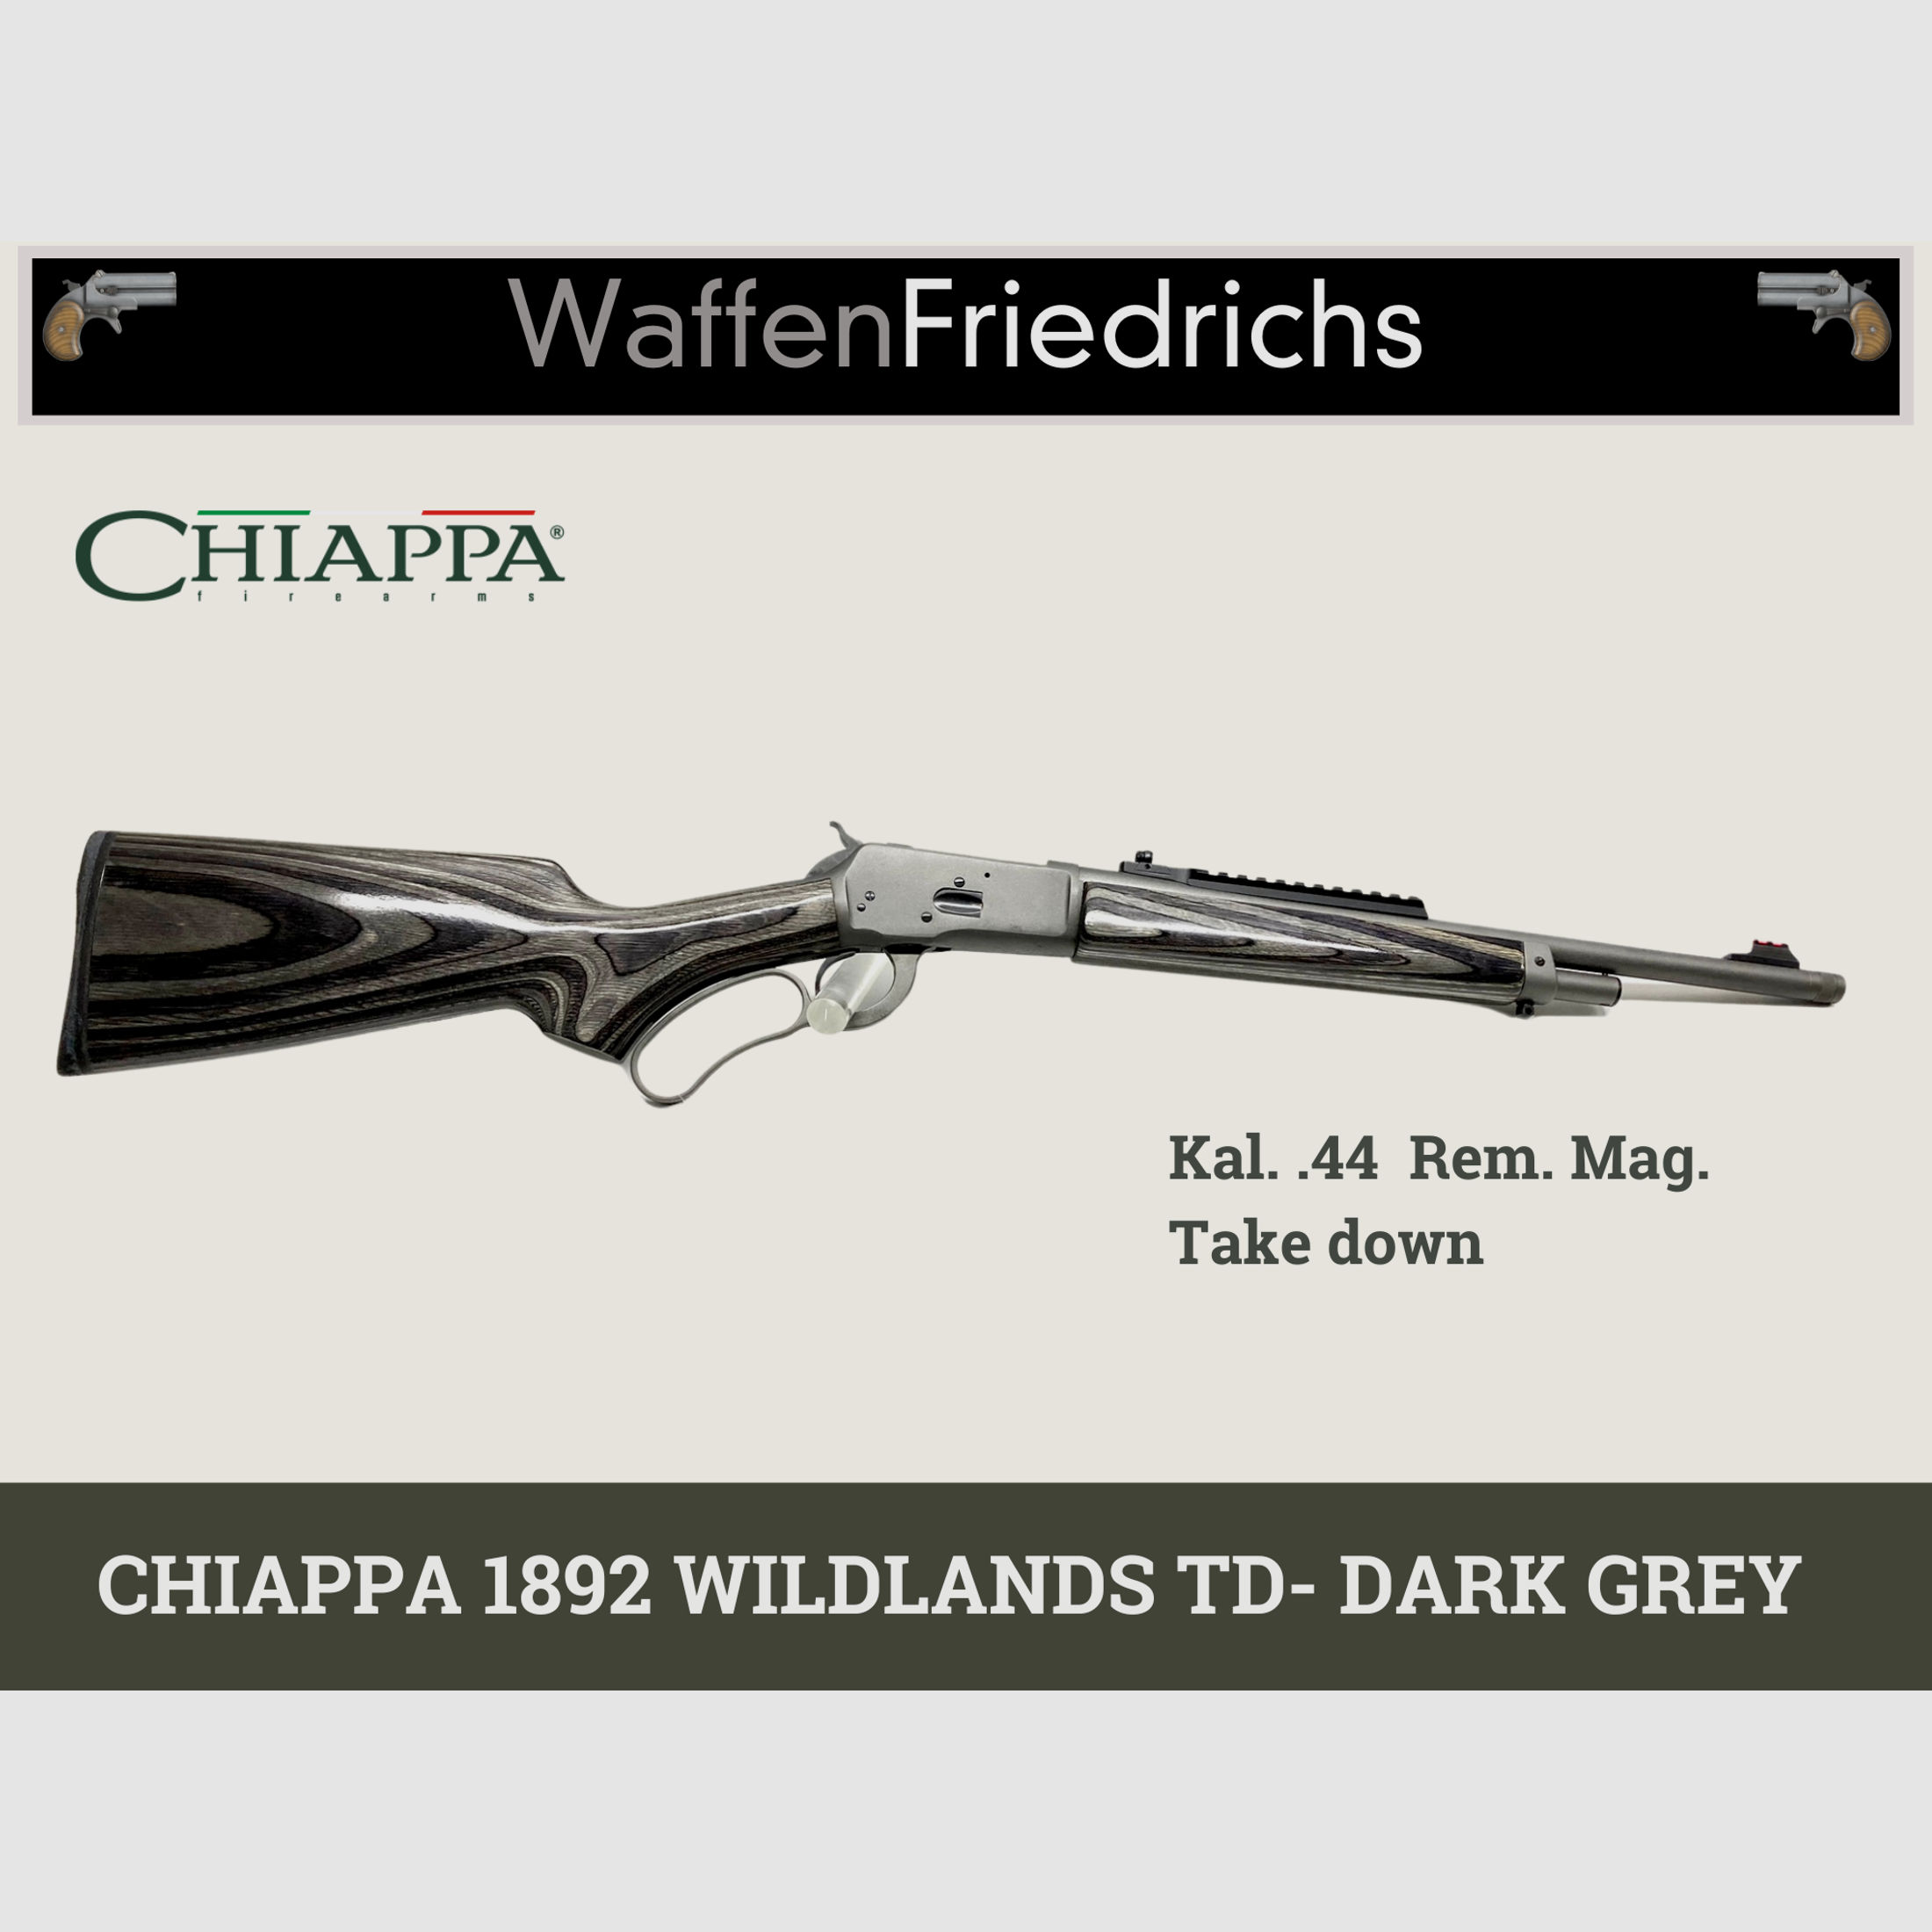 CHIAPPA 1892 WILDLANDS TD Take Down- DARK GREY - WaffenFriedrichs